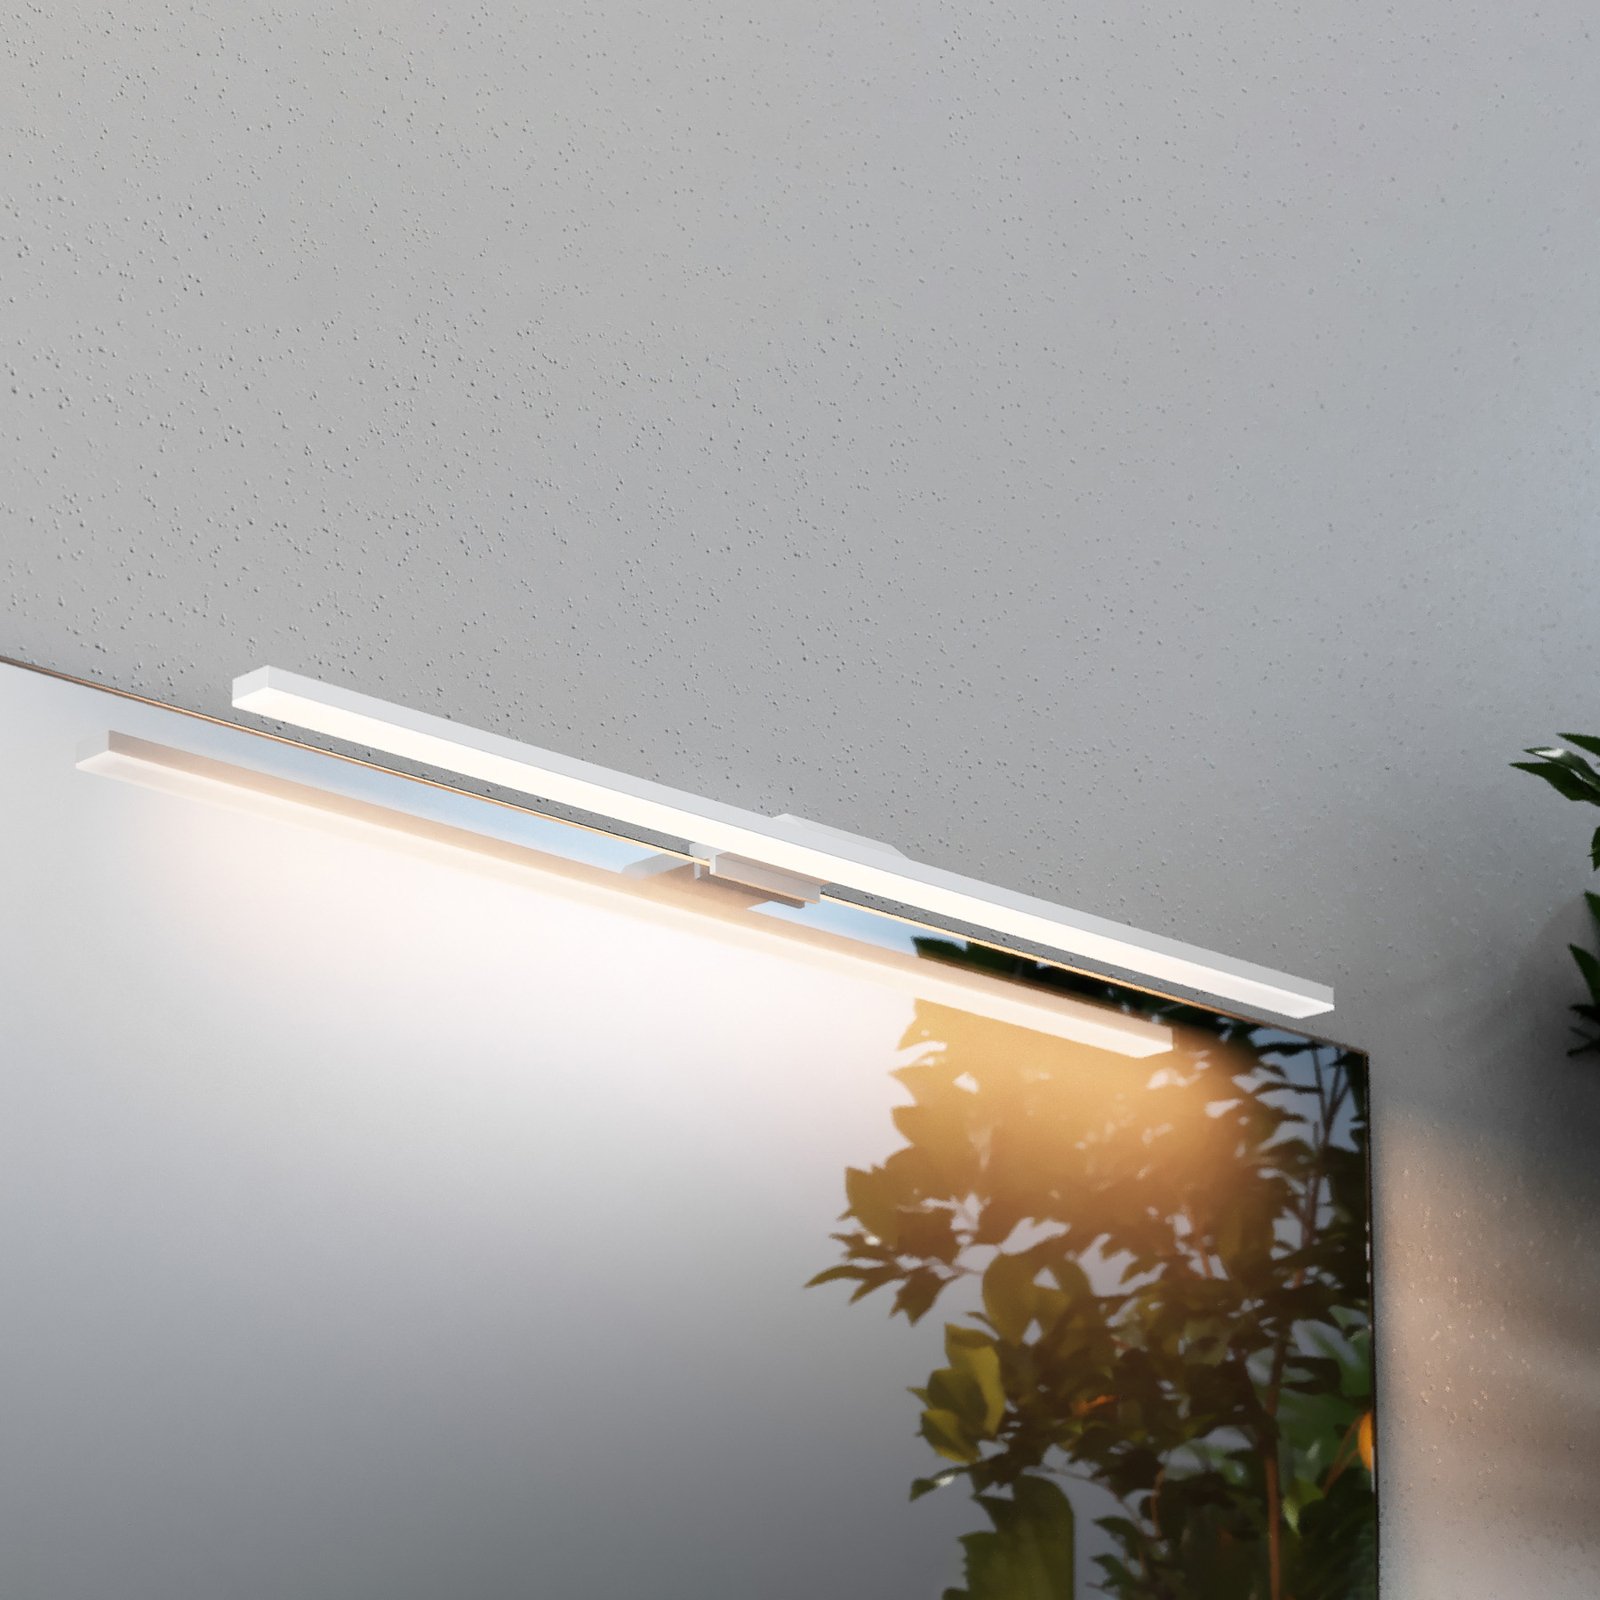 LED-Bad-Wandlampe Modena, IP44, weiß, 4.000 K, Breite 60 cm